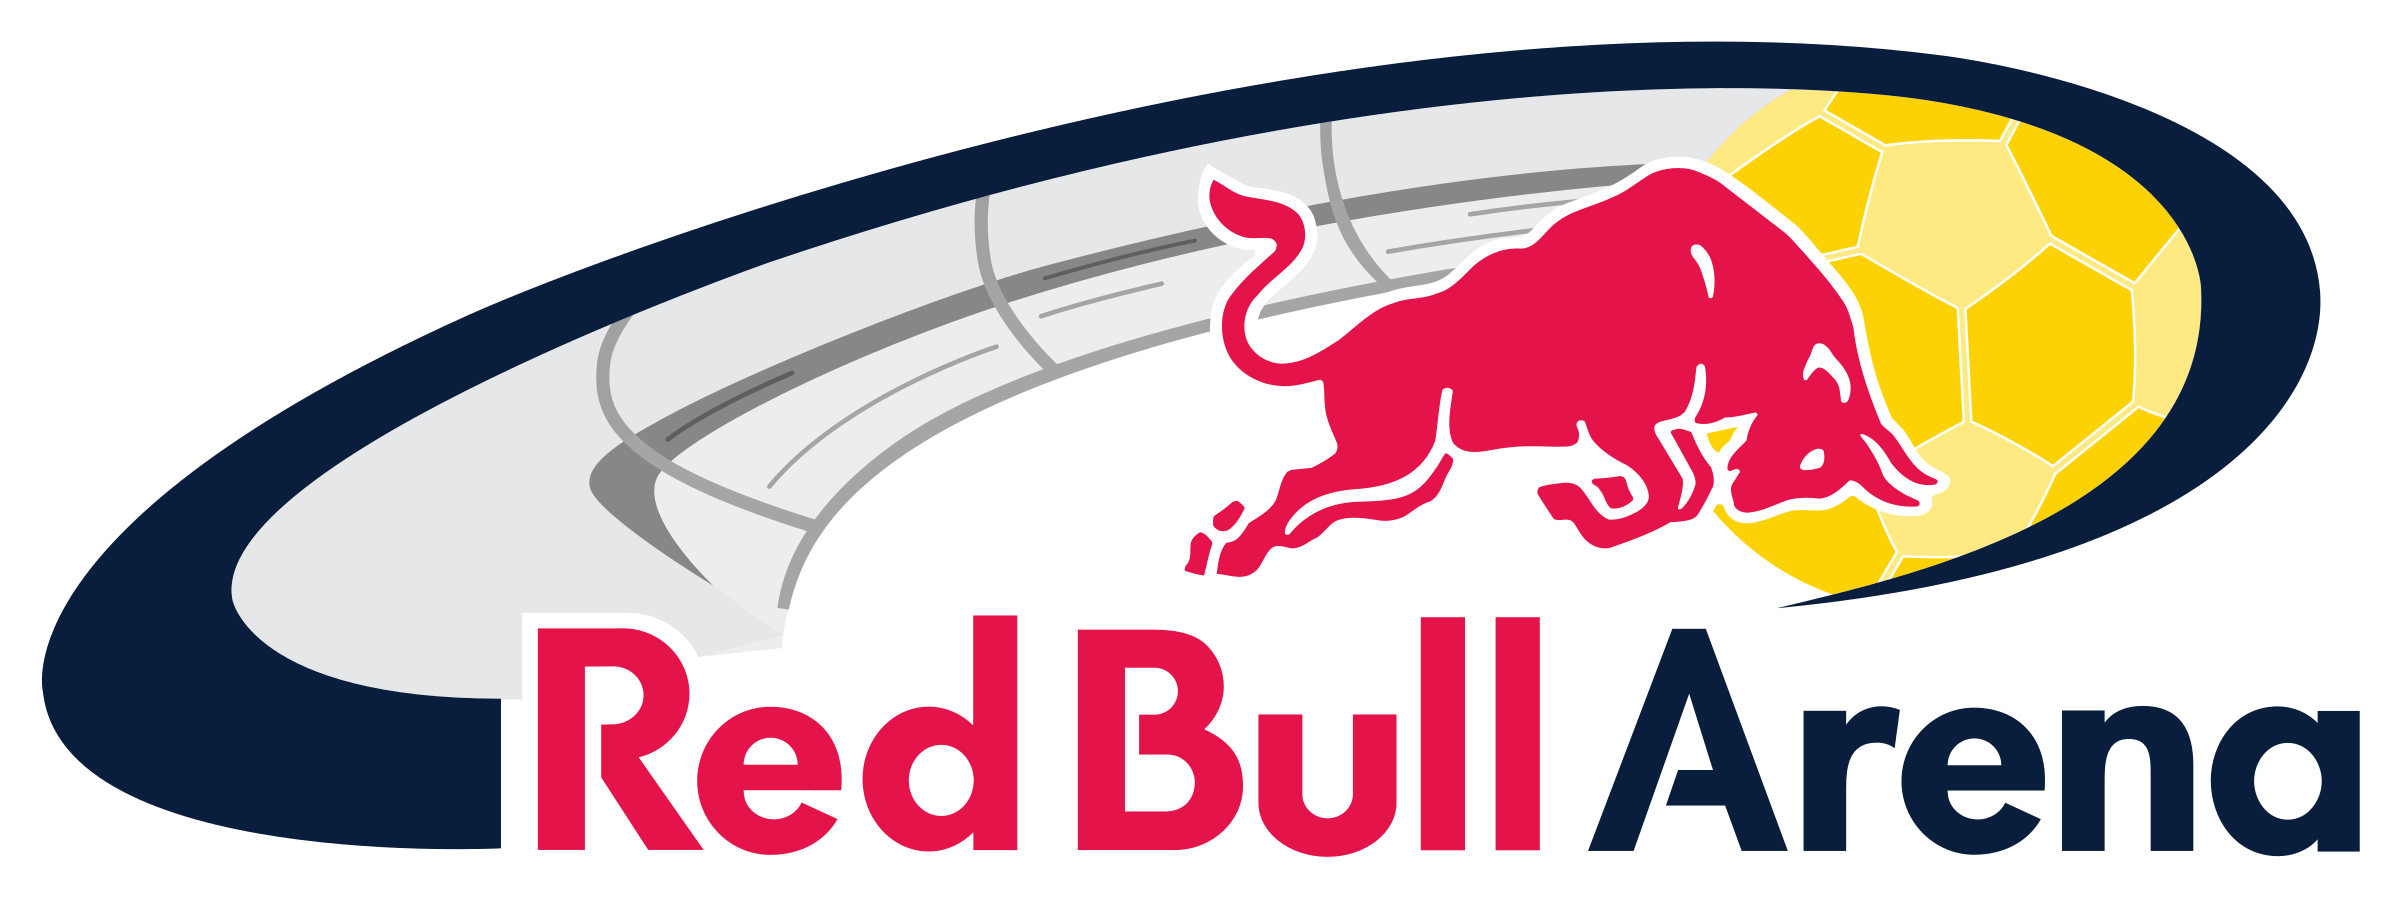 Arena Logo - Red Bull Arena Logo PNG Transparent & SVG Vector - Freebie Supply